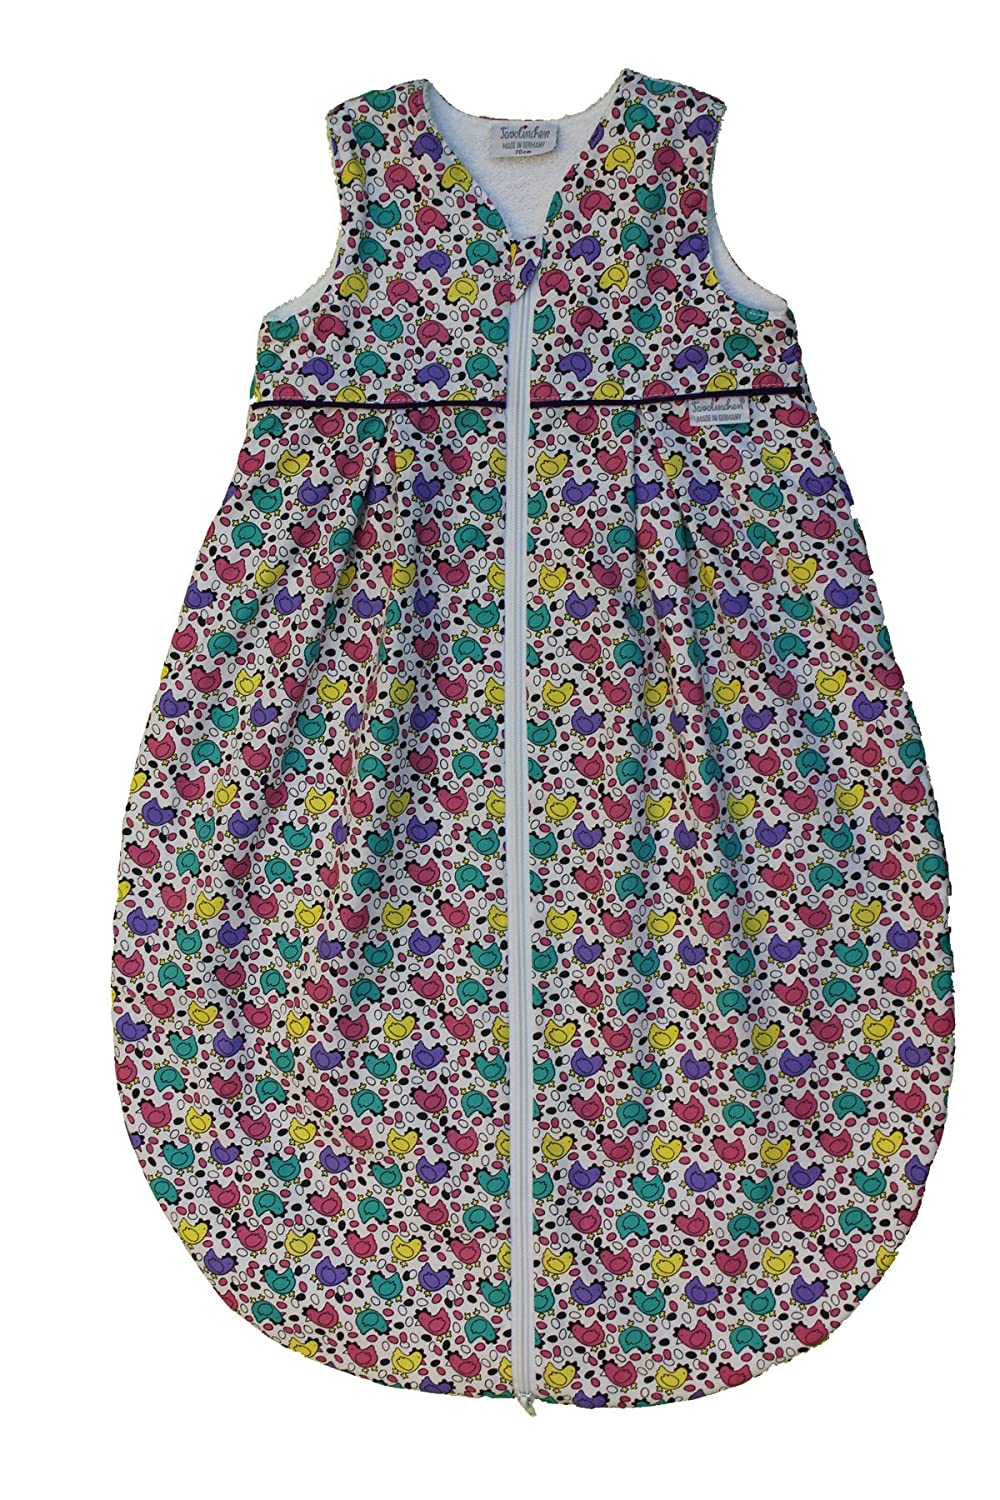 Tavolinchen 35/350 Sleeping Bag Terry Cloth with Multi-Coloured Chicks – 110 cm 70 cm original